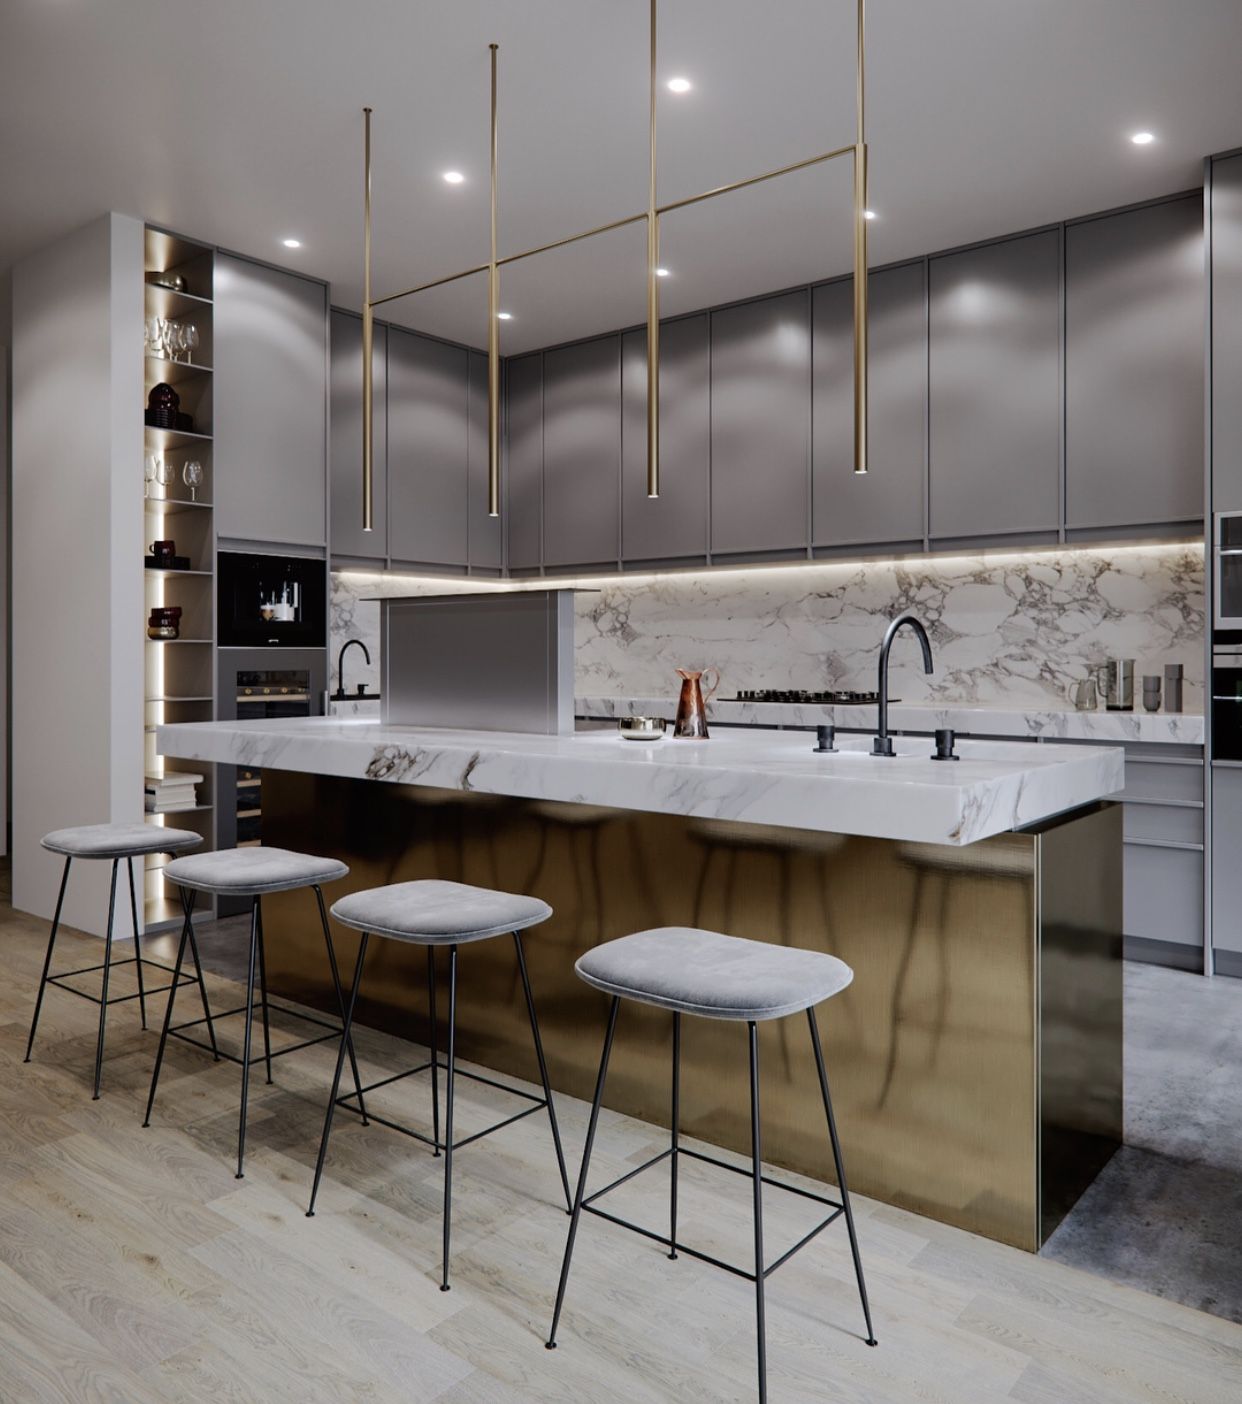 Konsep hunian modern banyak mengusung model kitchen set minimalis mewah mini bar.